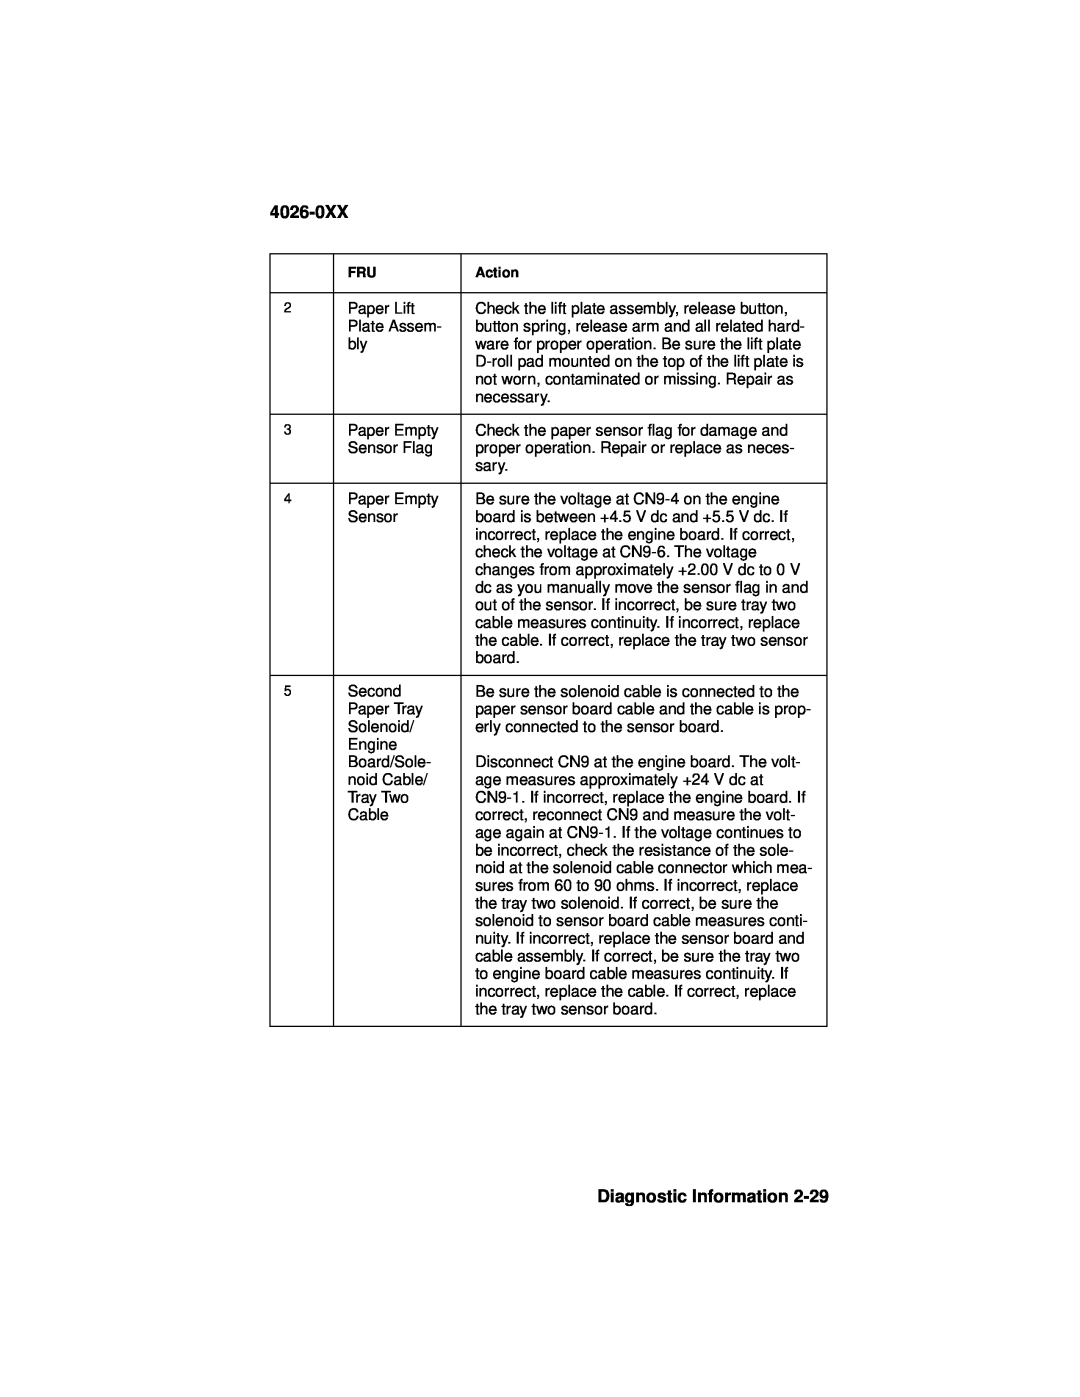 Lexmark OptraTM manual 4026-0XX, Diagnostic Information, Paper Lift 